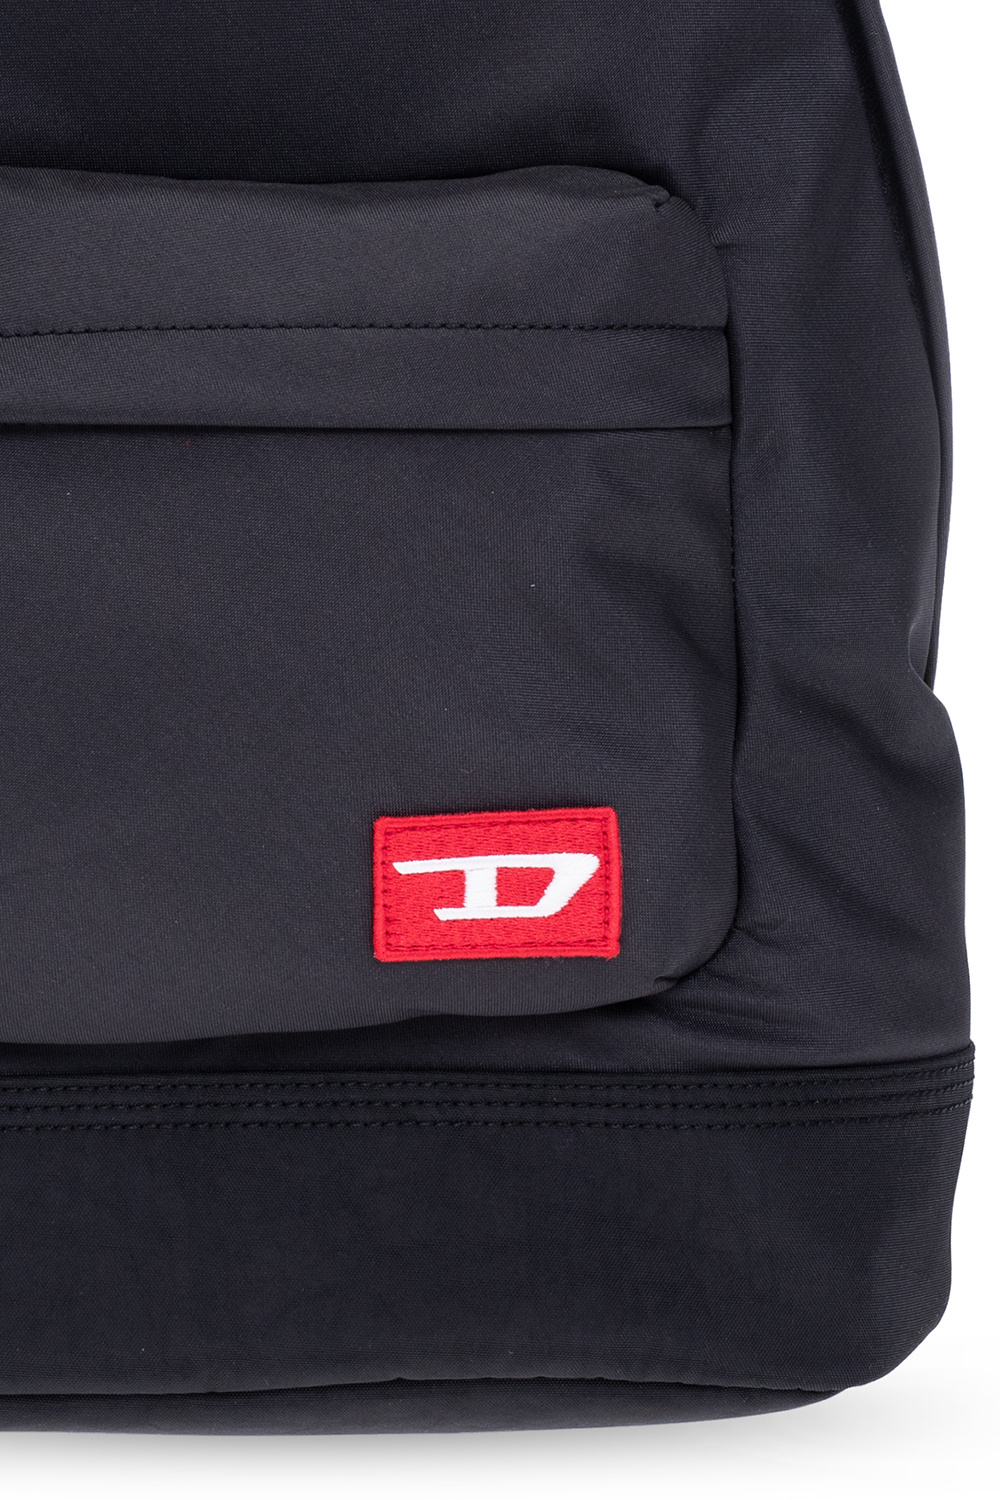 Diesel ‘Farb’ logo-plaque backpack